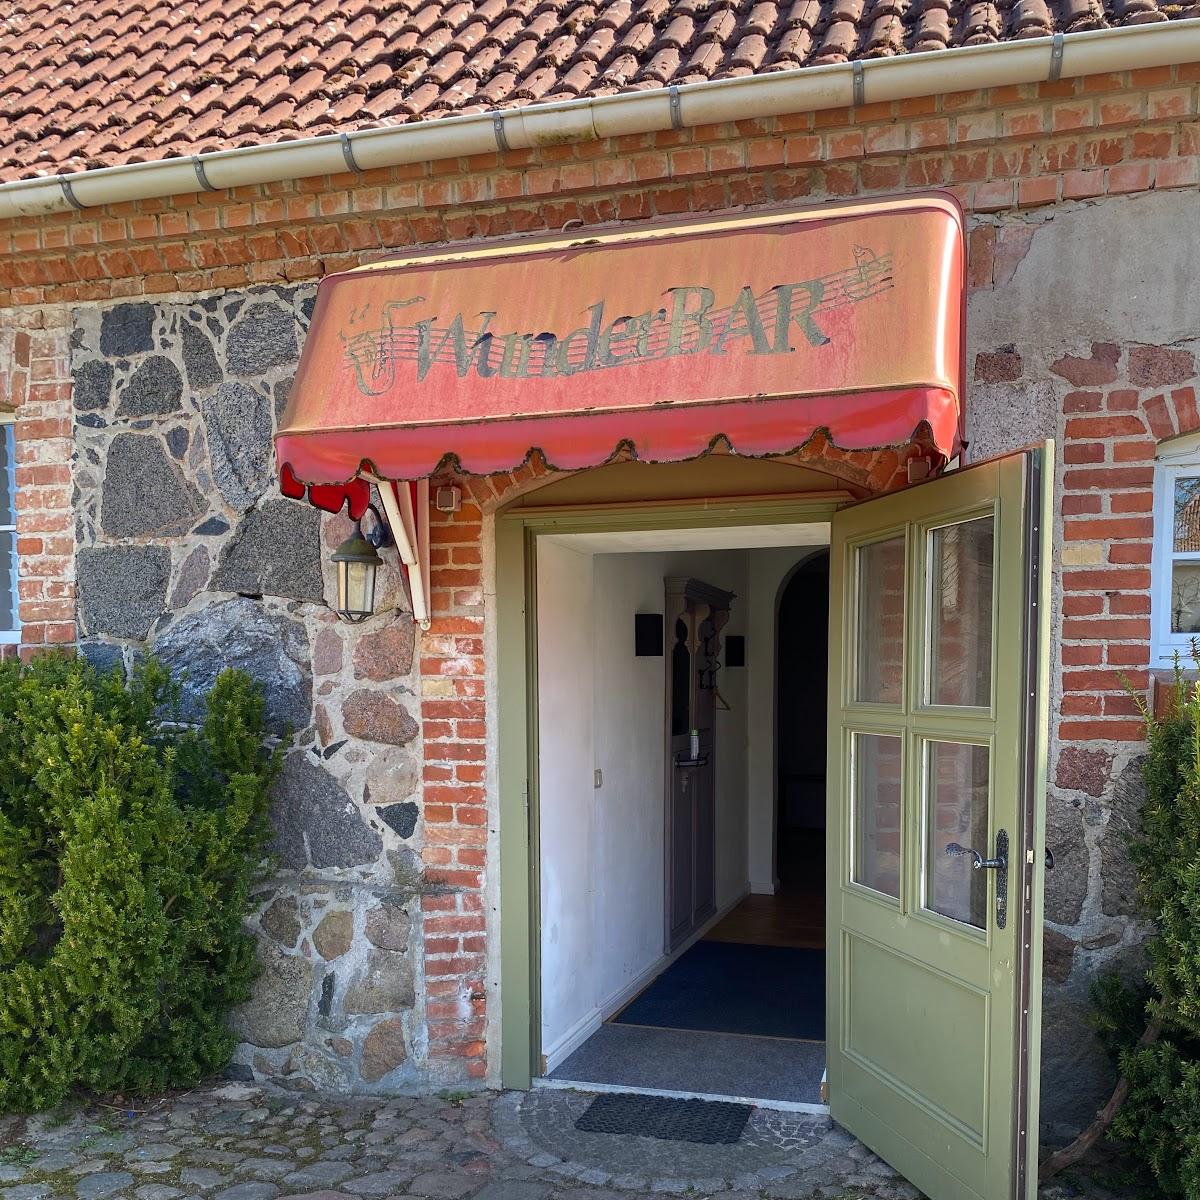 Restaurant "Café Wunderbar" in Uckerland